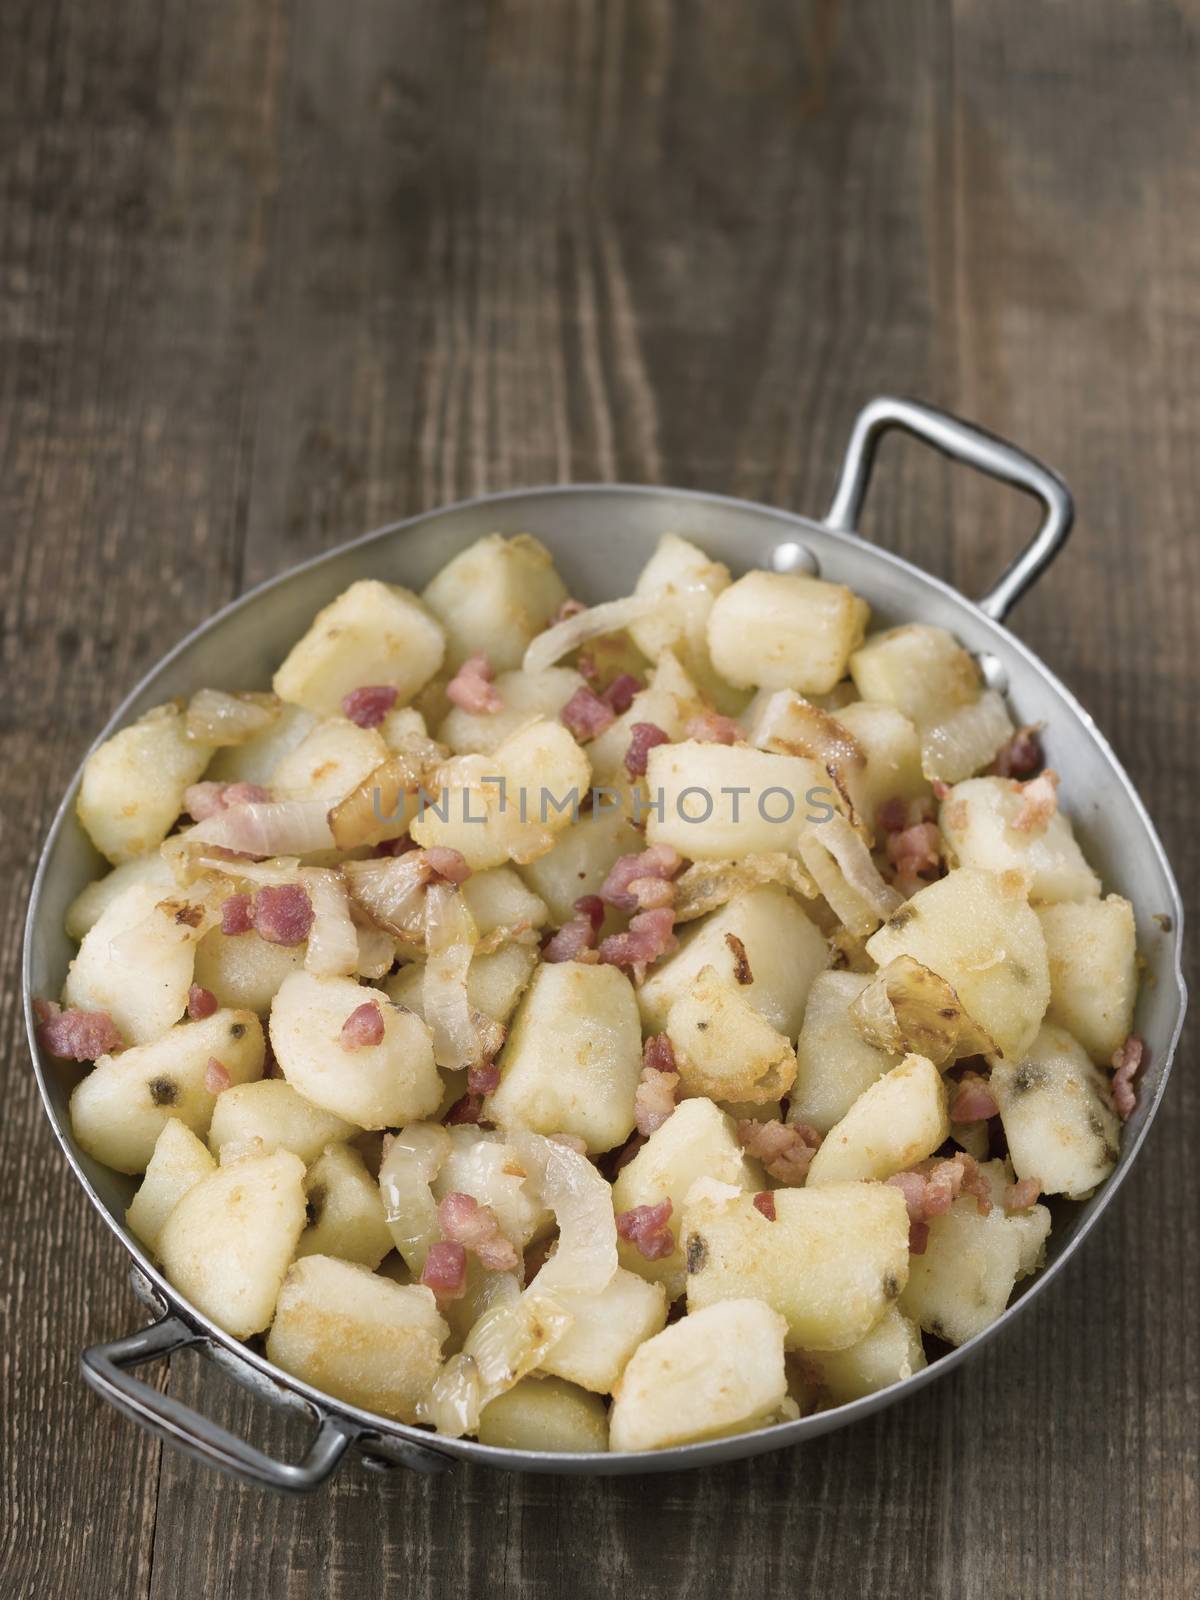 rustic german pan fried potato bratkartoffeln by zkruger